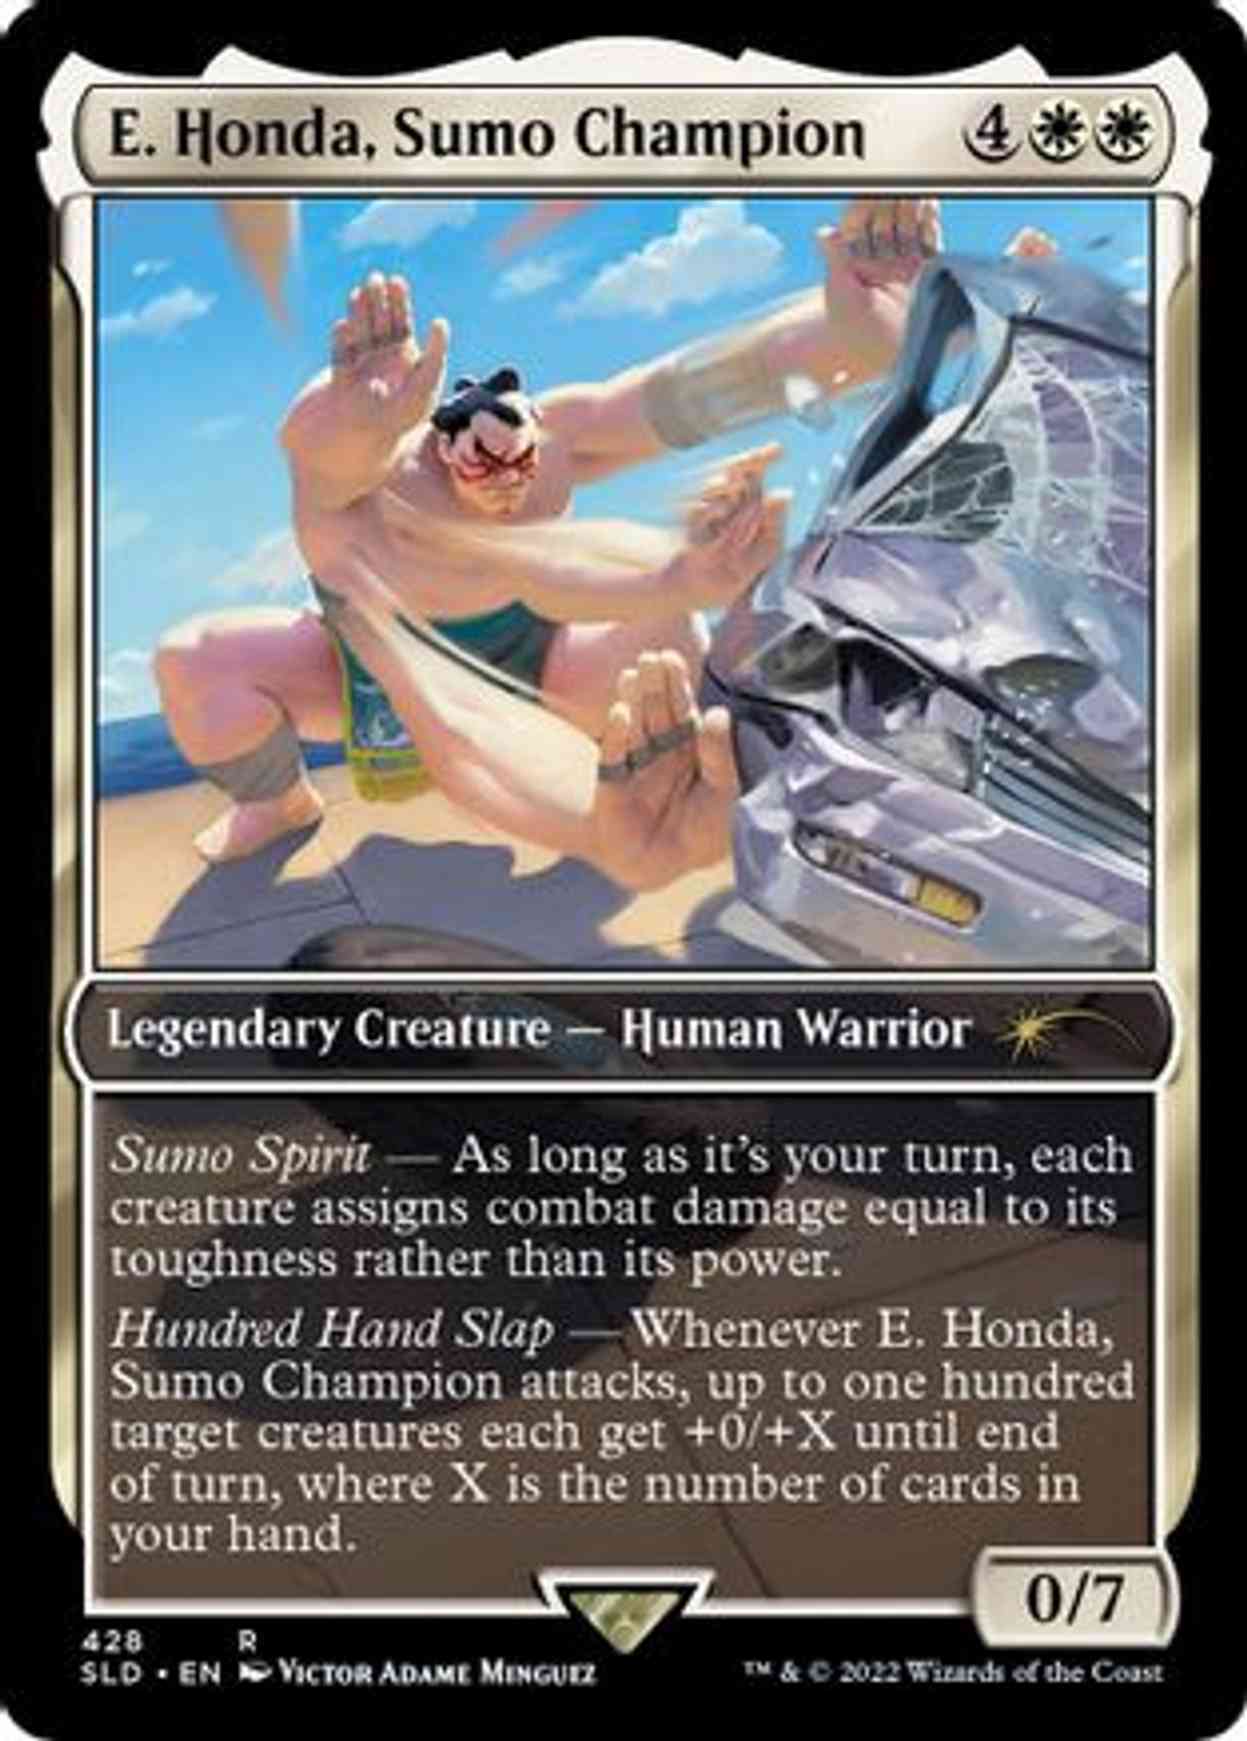 E. Honda, Sumo Champion magic card front